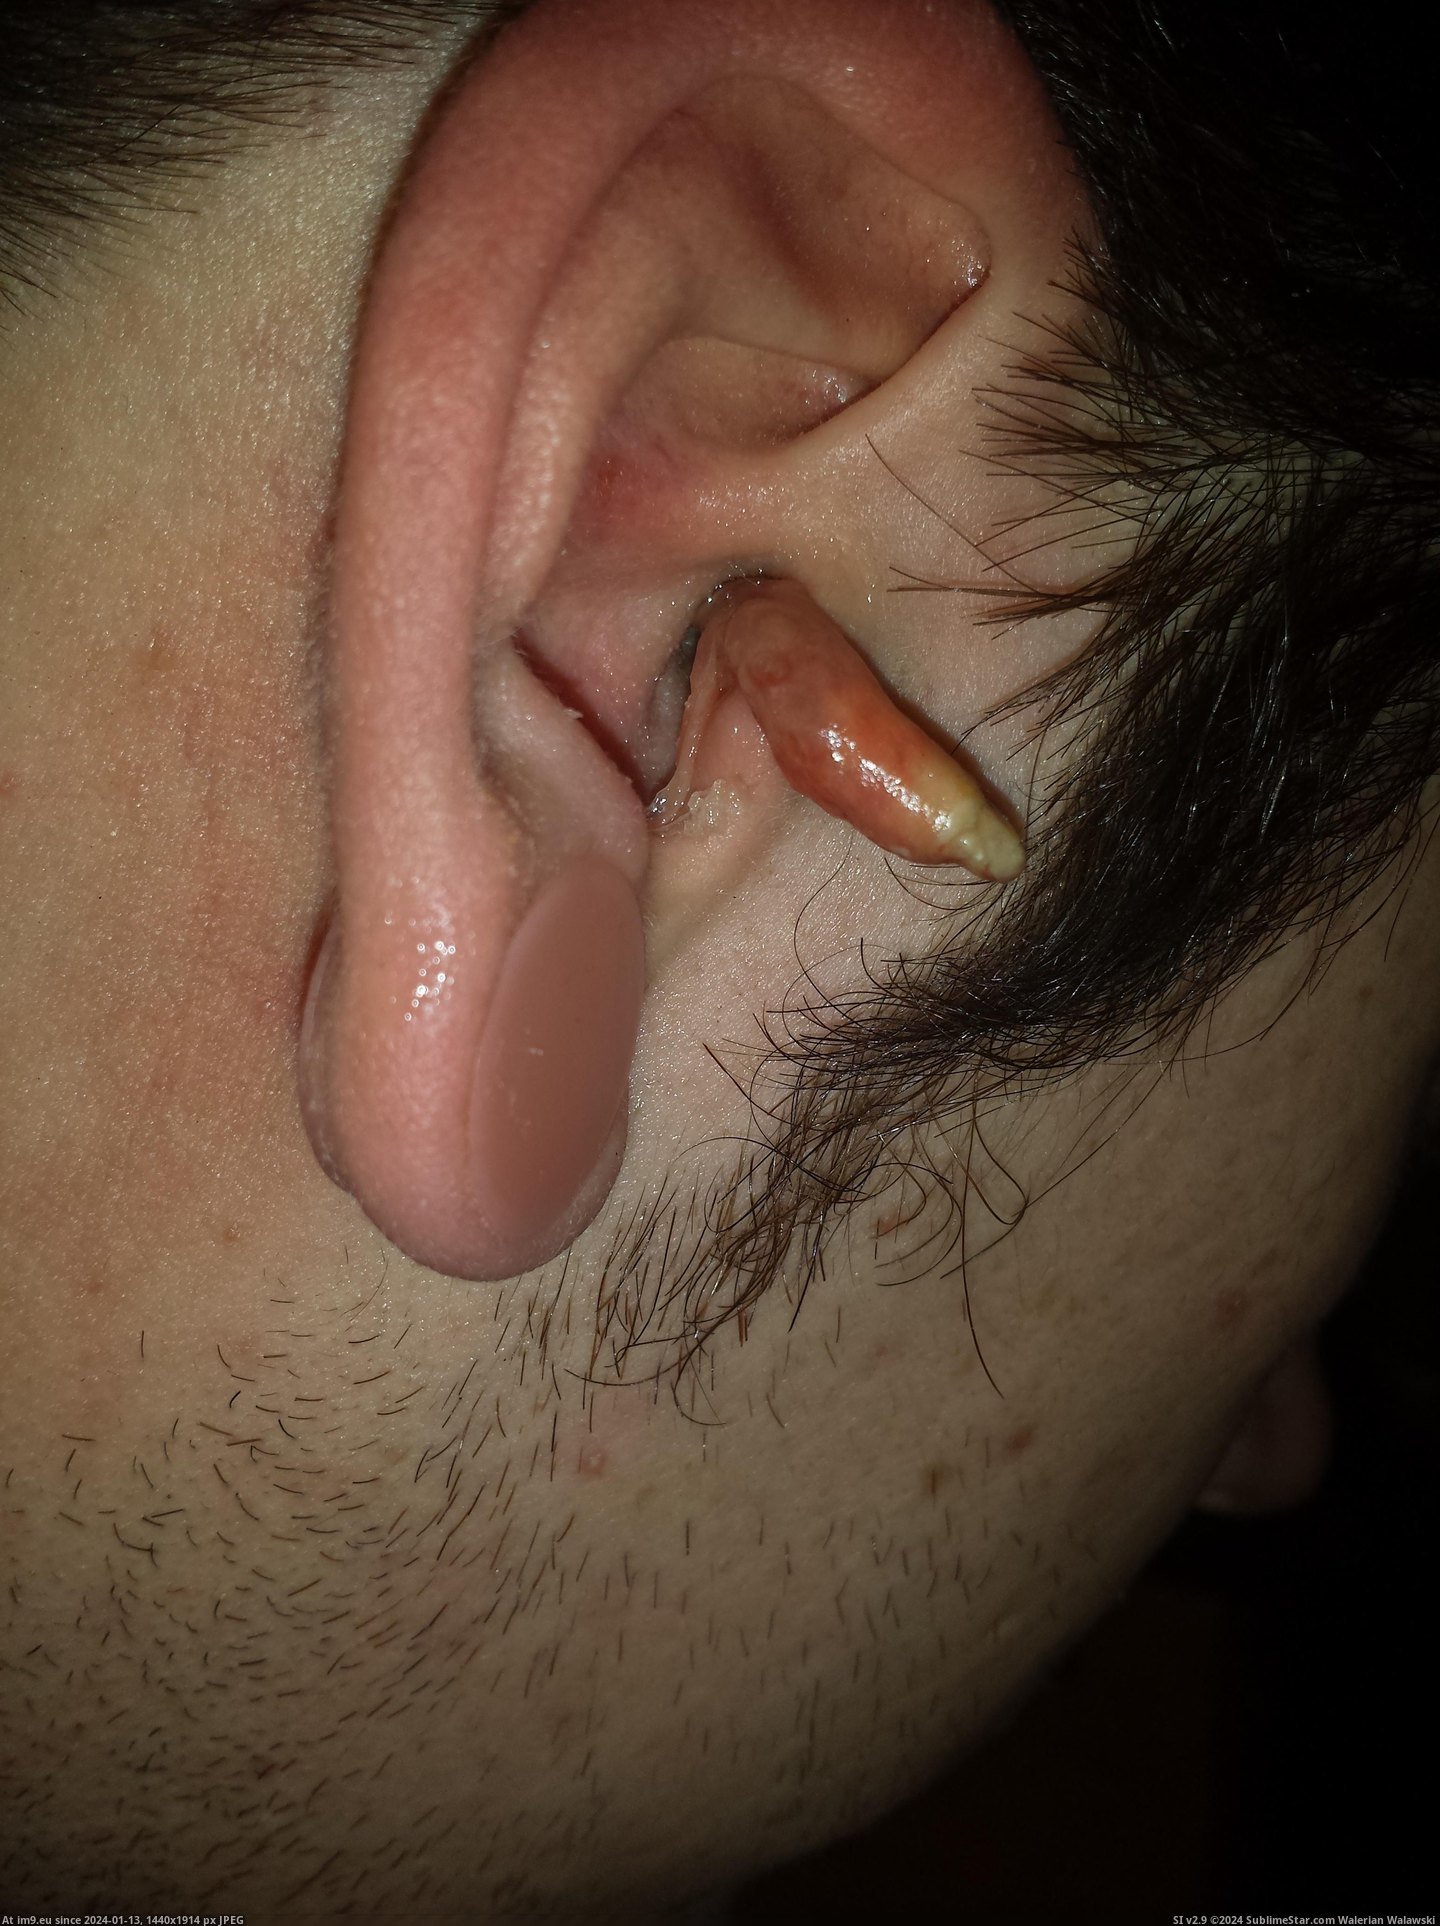 #Wtf #Ear #Infection #Crazy [Wtf] My crazy ear infection 3 Pic. (Bild von album My r/WTF favs))